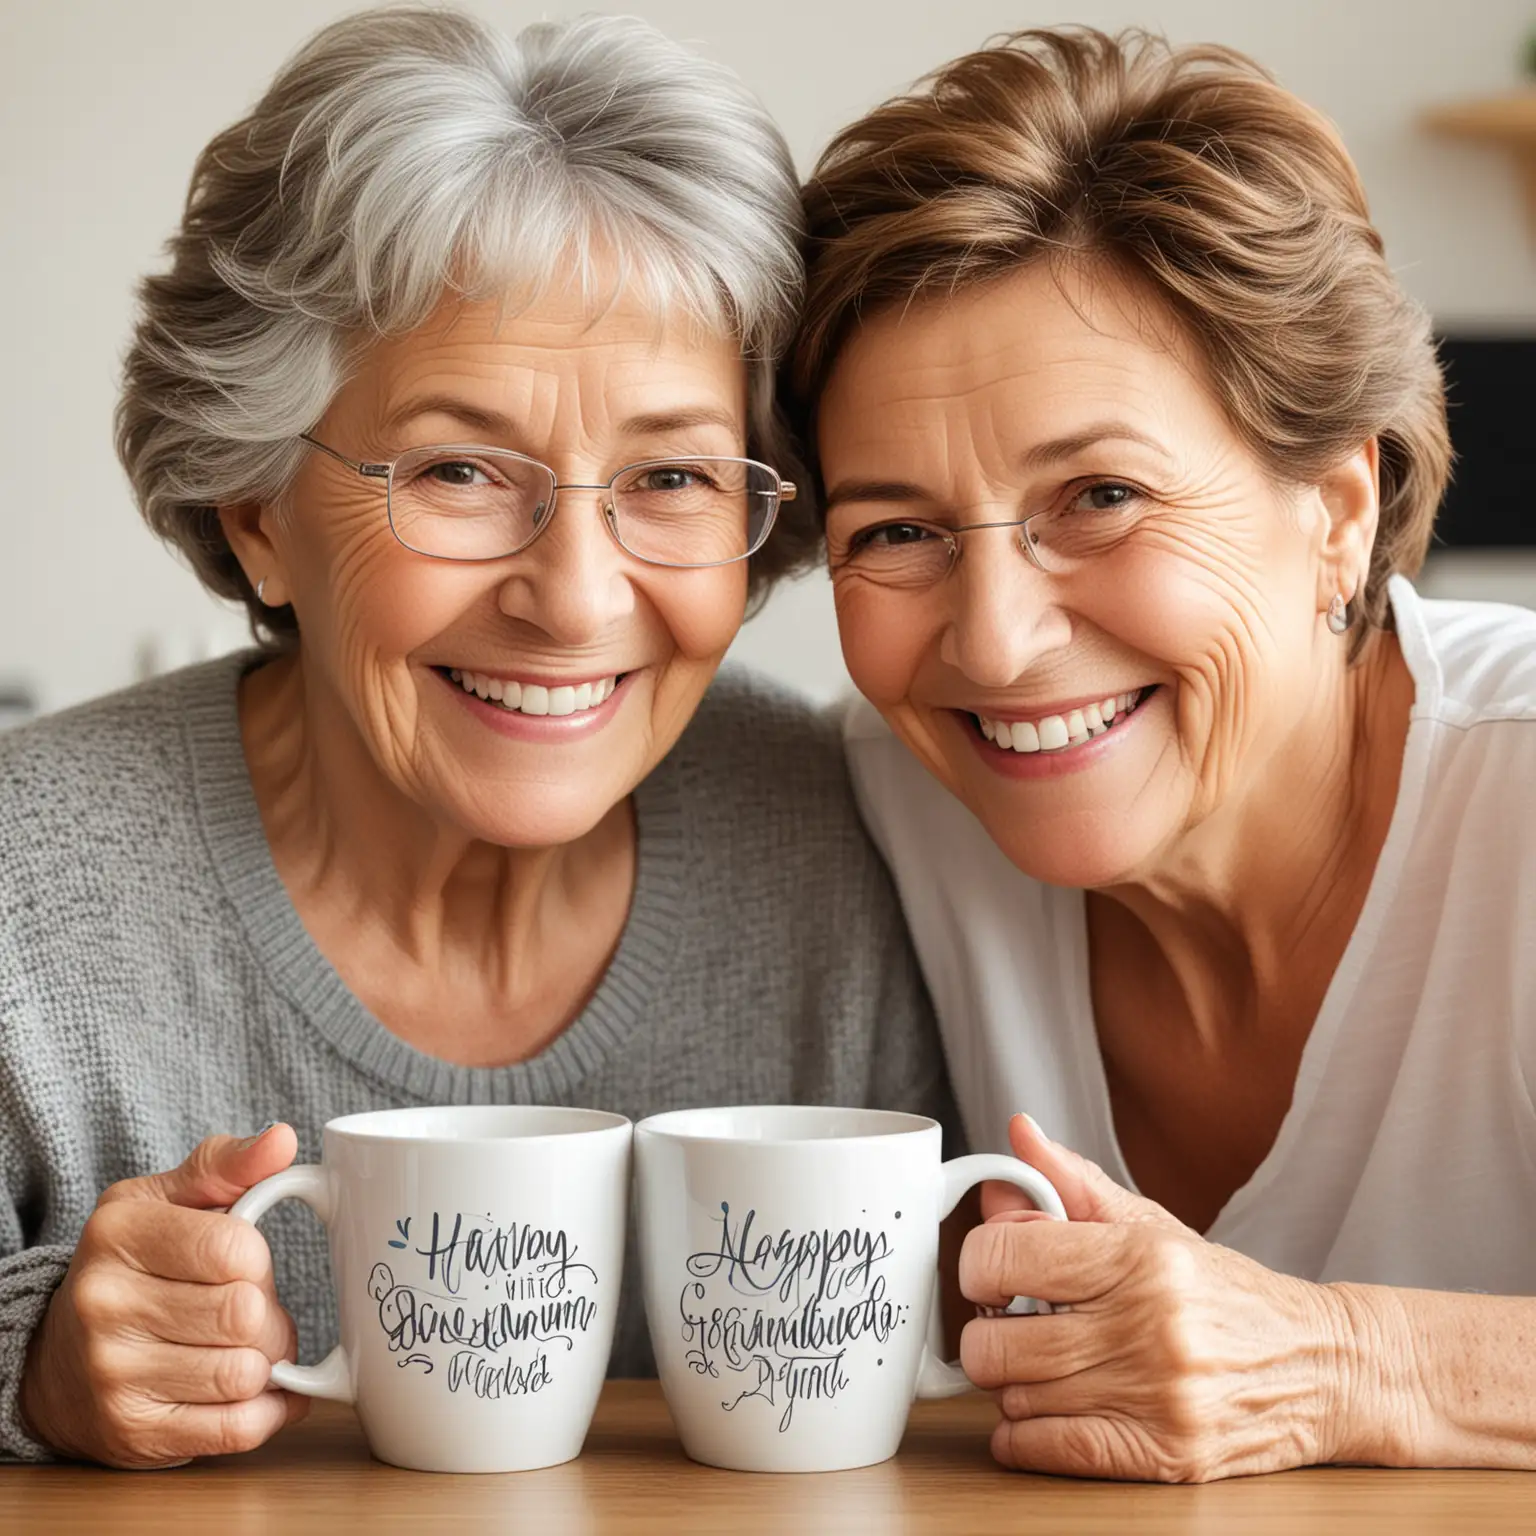 Cheerful Grandmother Enjoying Time with Grandchild and Custom Coffee Mugs